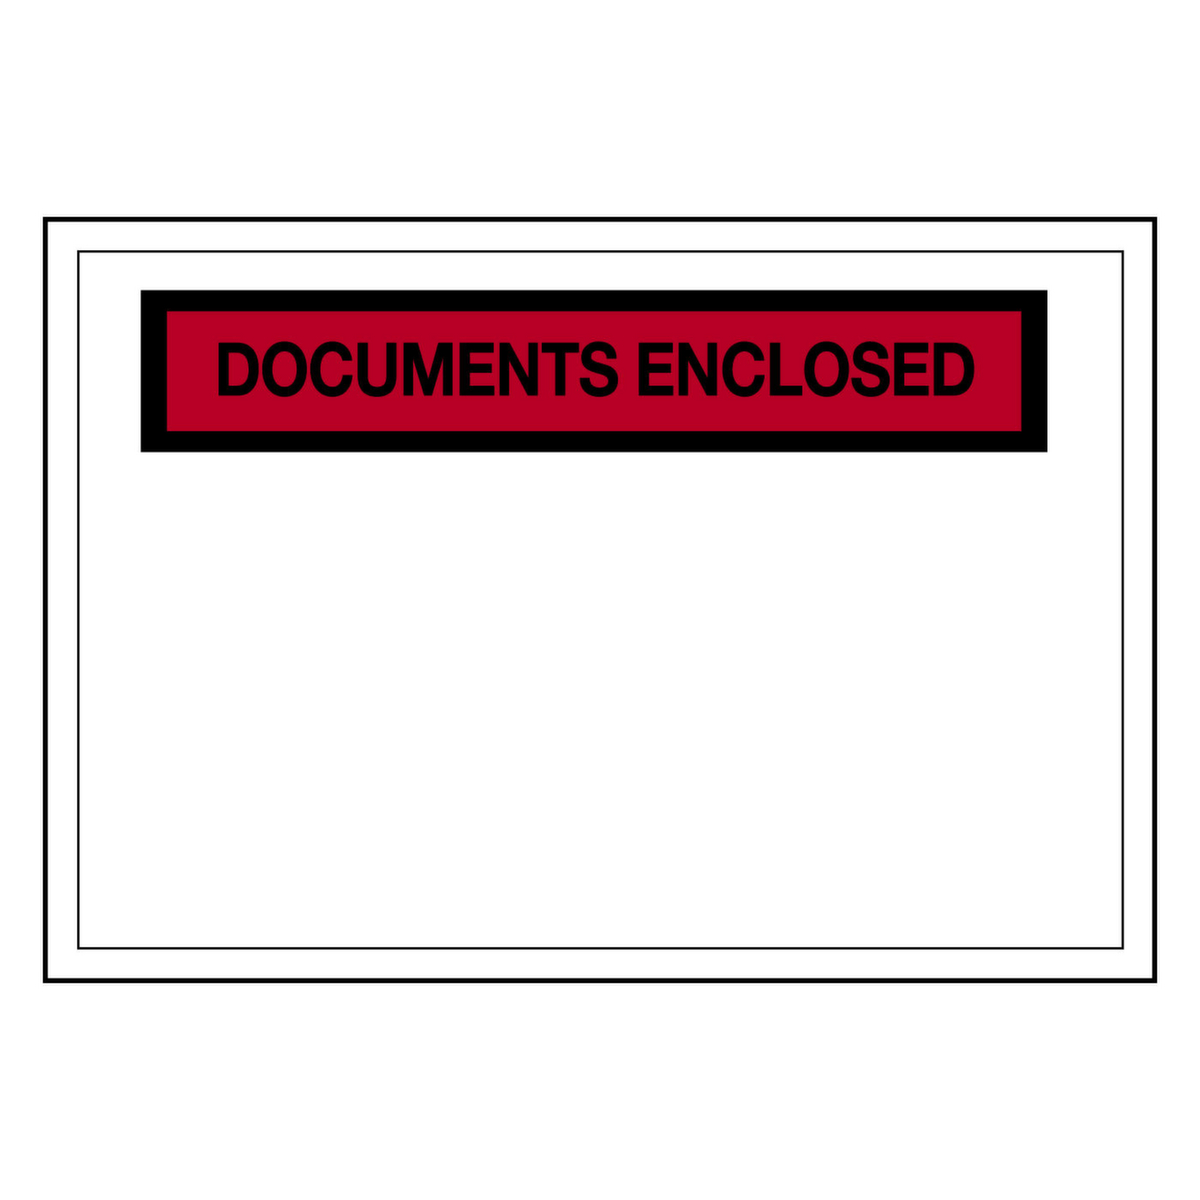 Raja Dokumententasche "Documents enclosed", DIN A6 Standard 1 ZOOM